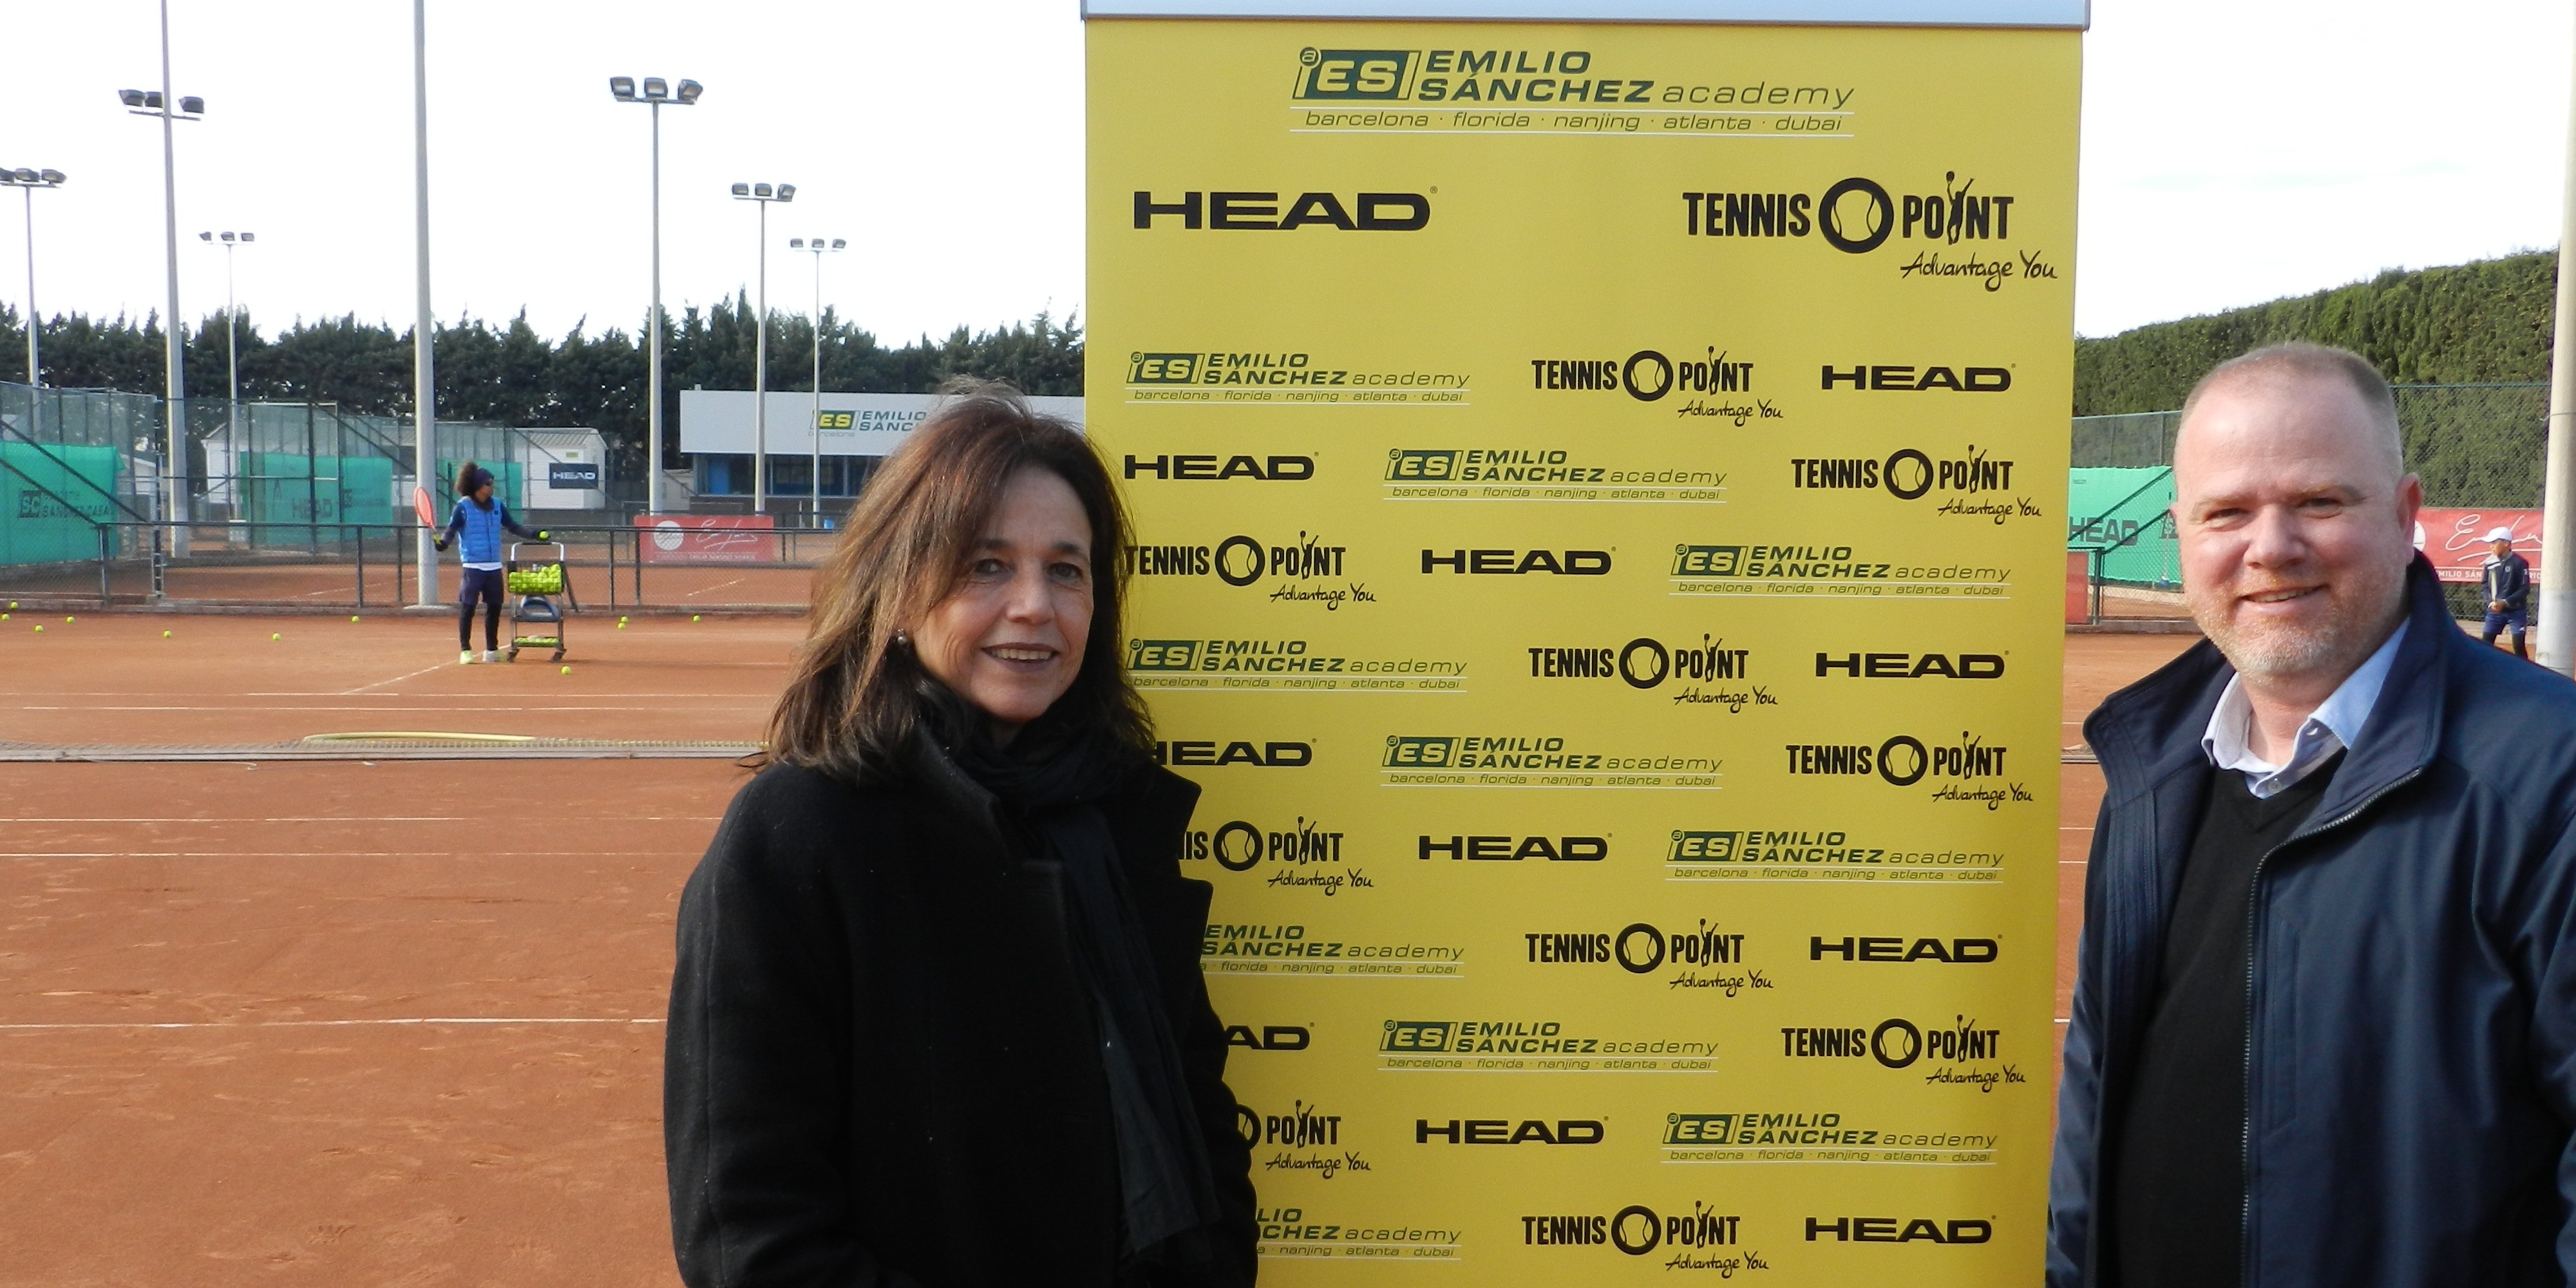 Alliance Emilio Sánchez Academy and Tennis-Point